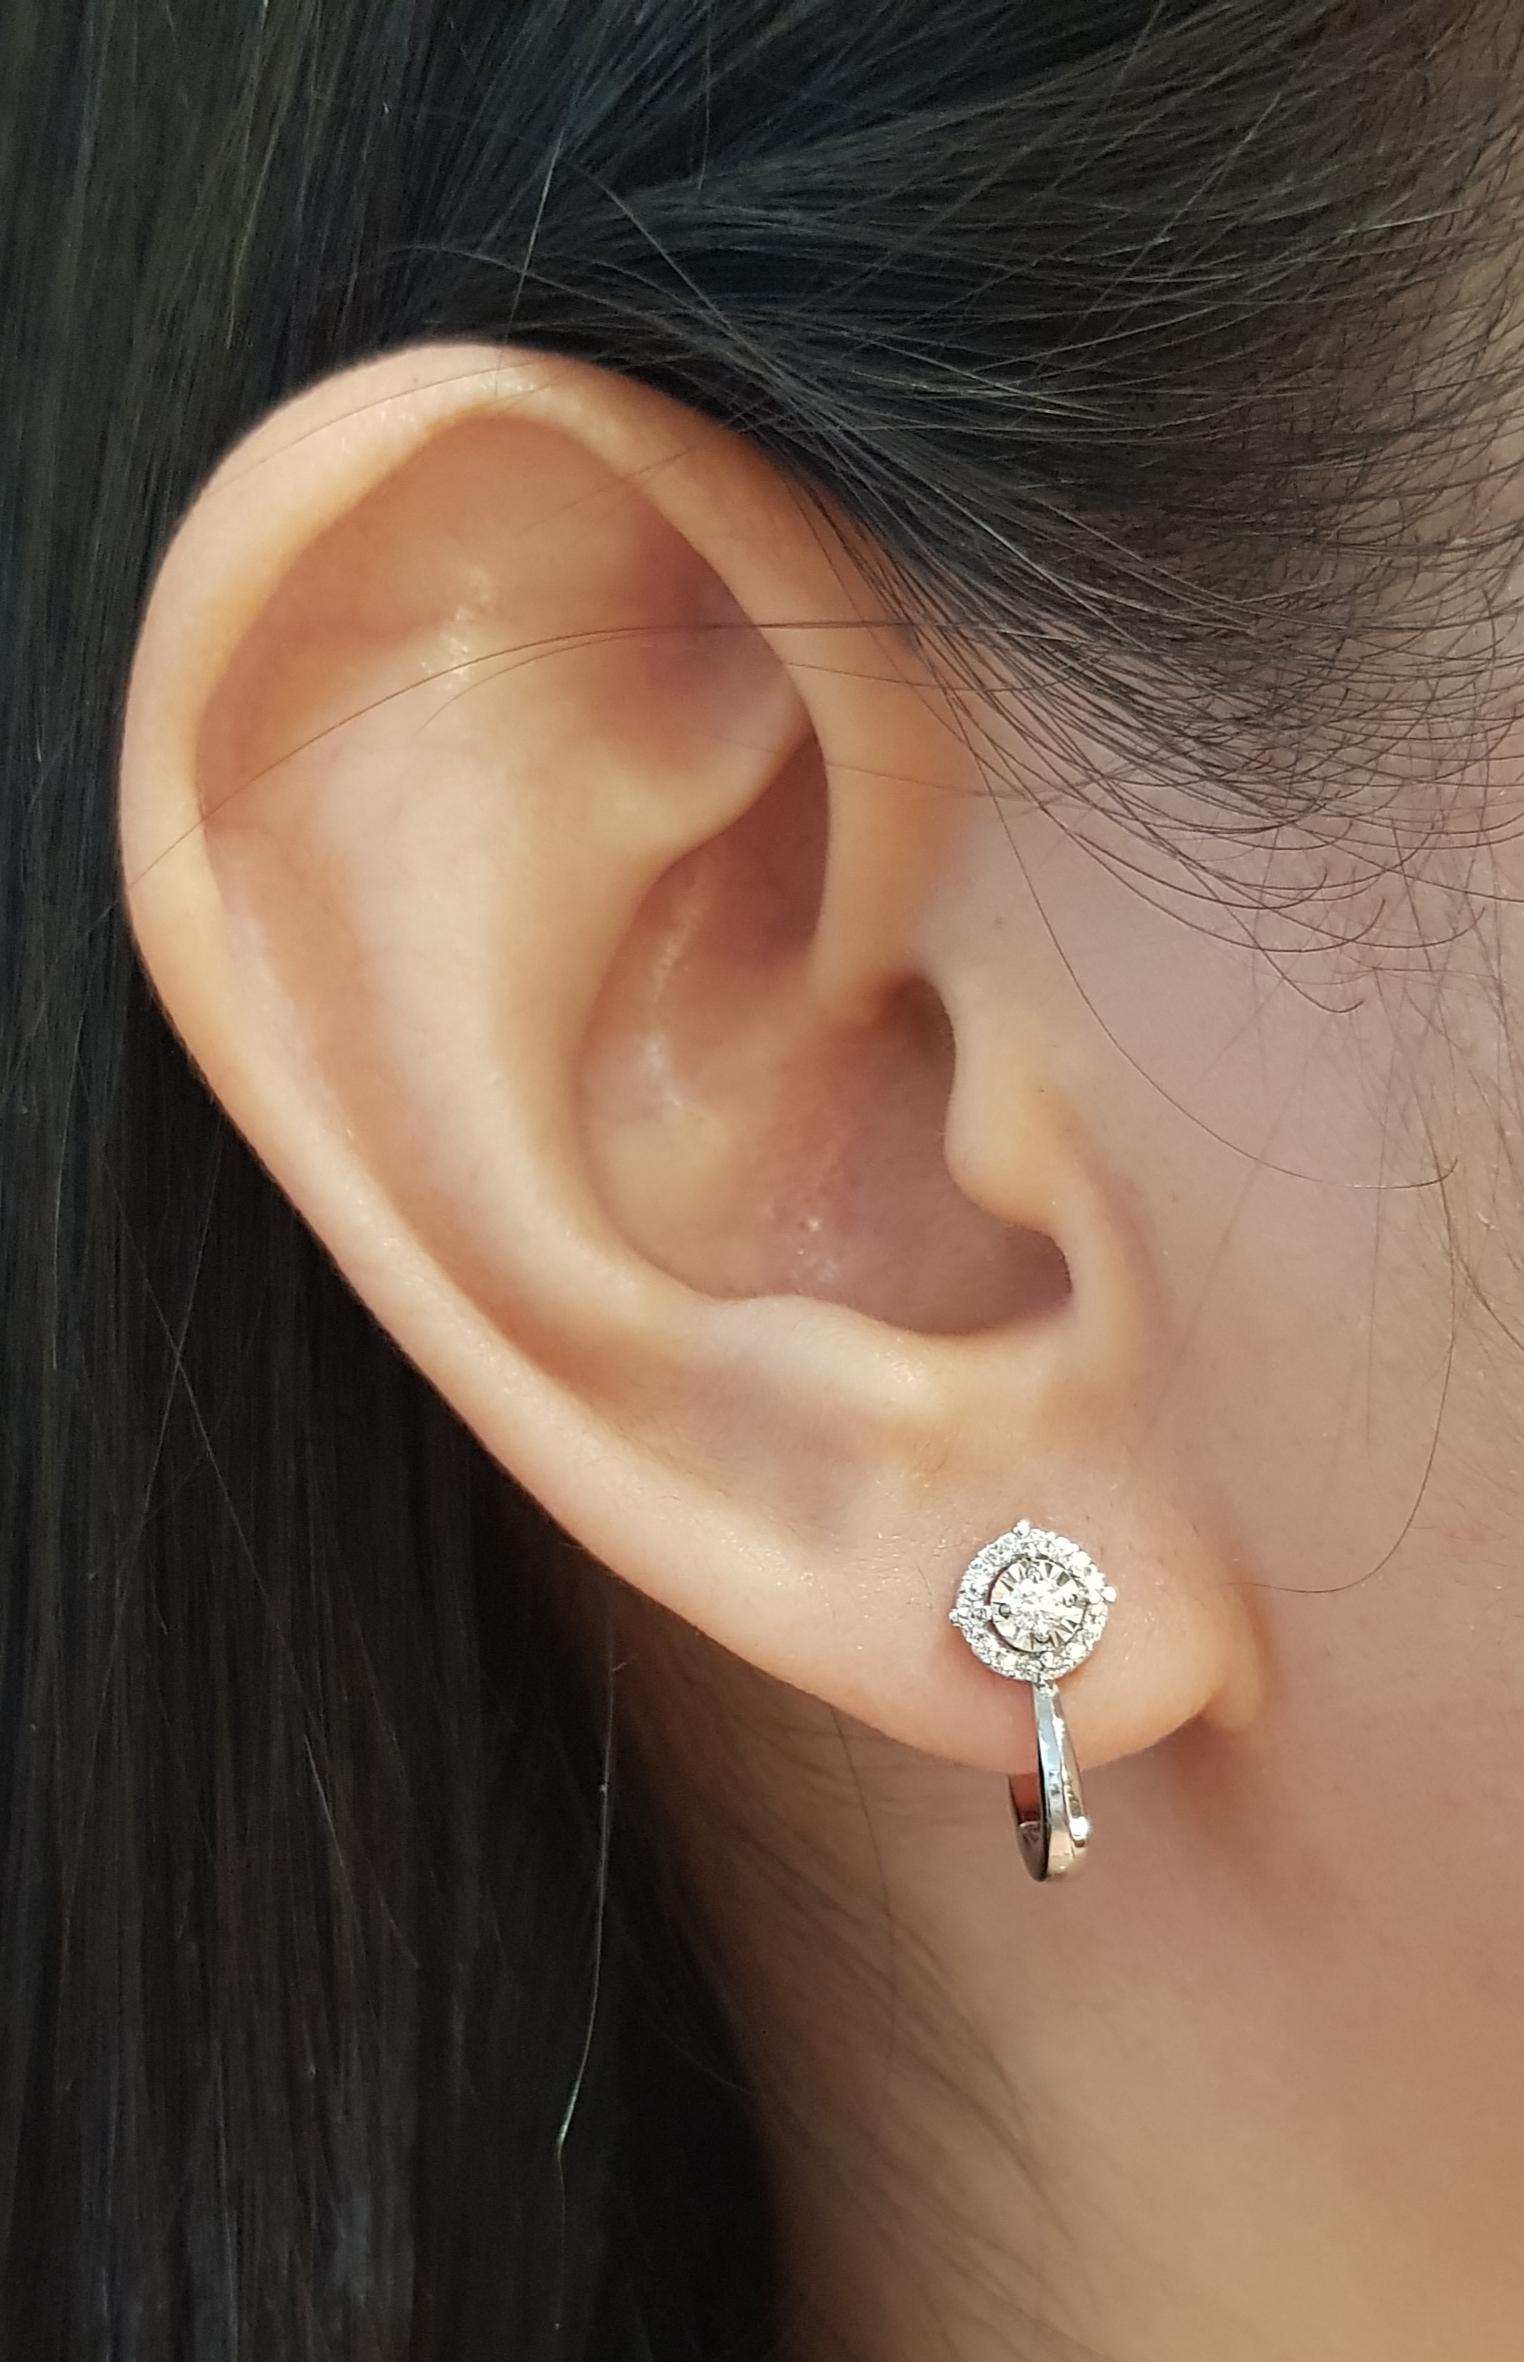 Diamond 0.17 carat Earrings set in 18K White Gold Settings

Width: 0.7 cm 
Length: 1.5 cm
Total Weight: 3.47 grams

